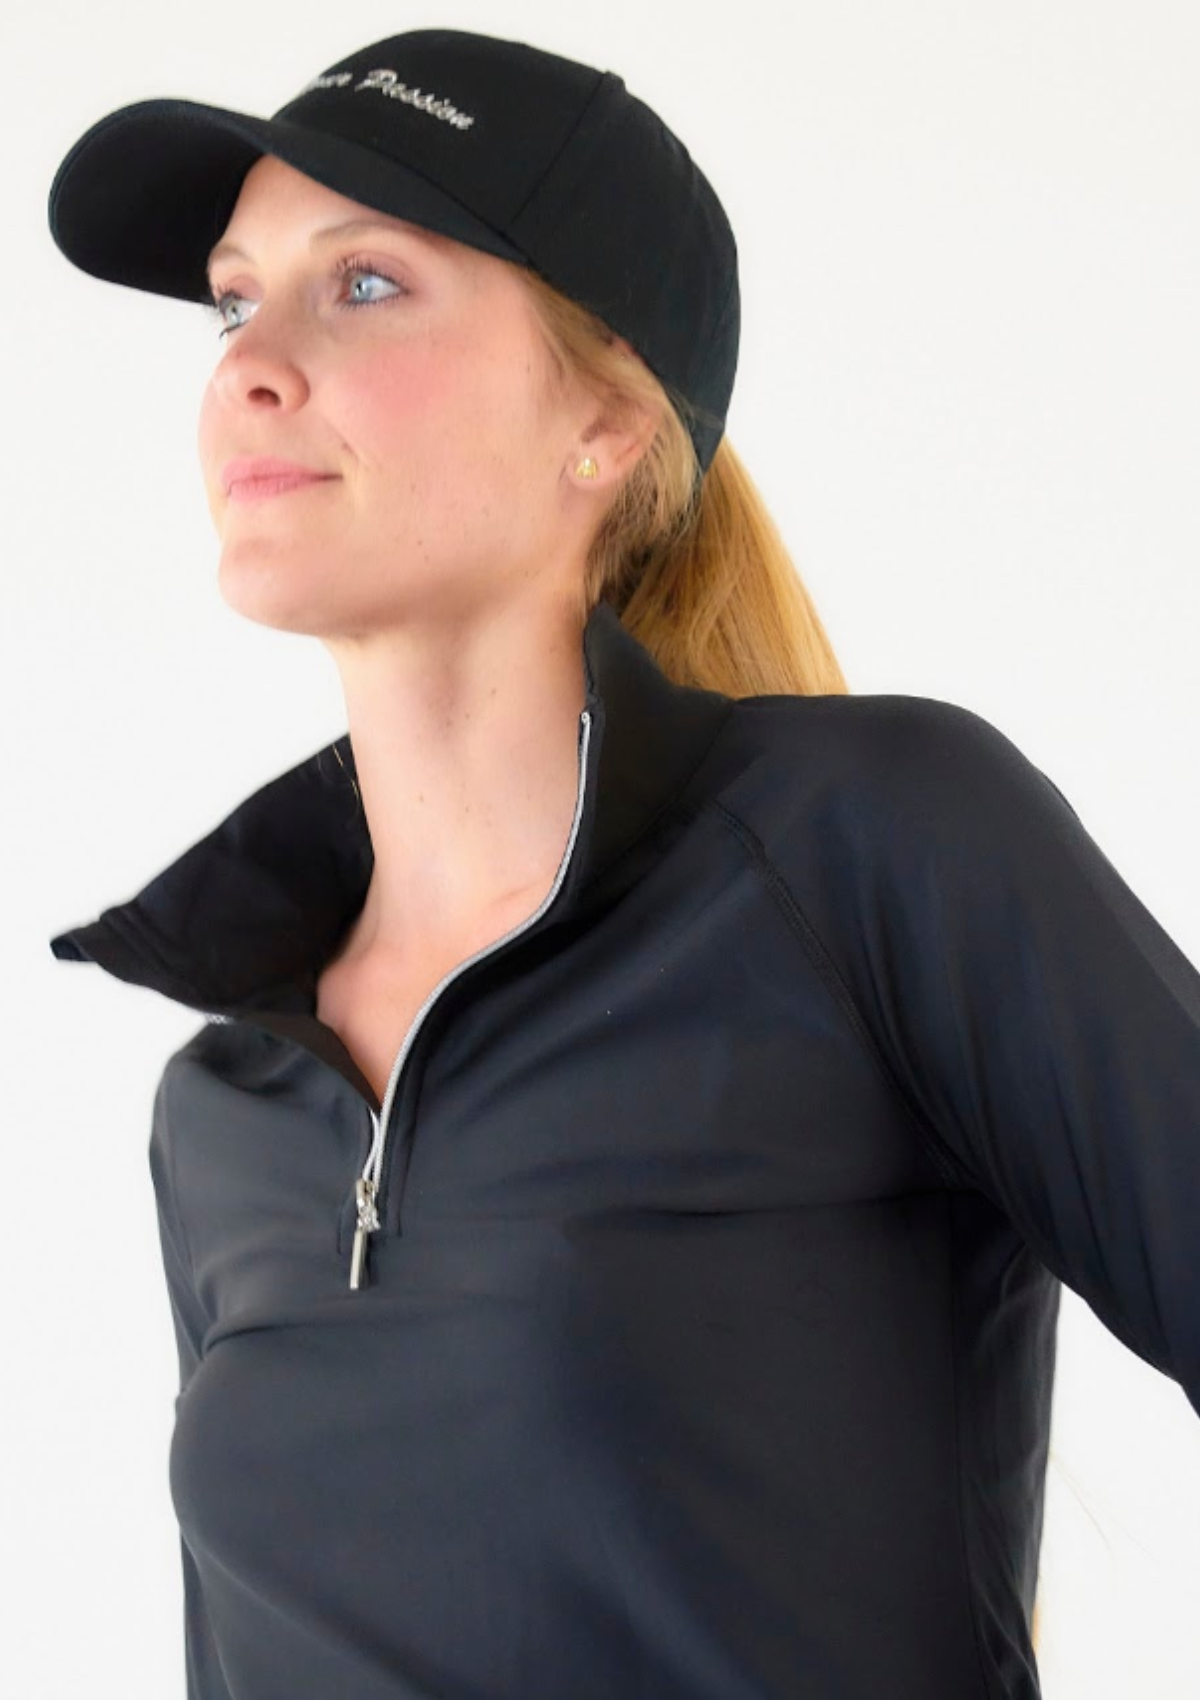 Woman in hat wearing black 1/4-zip top in black